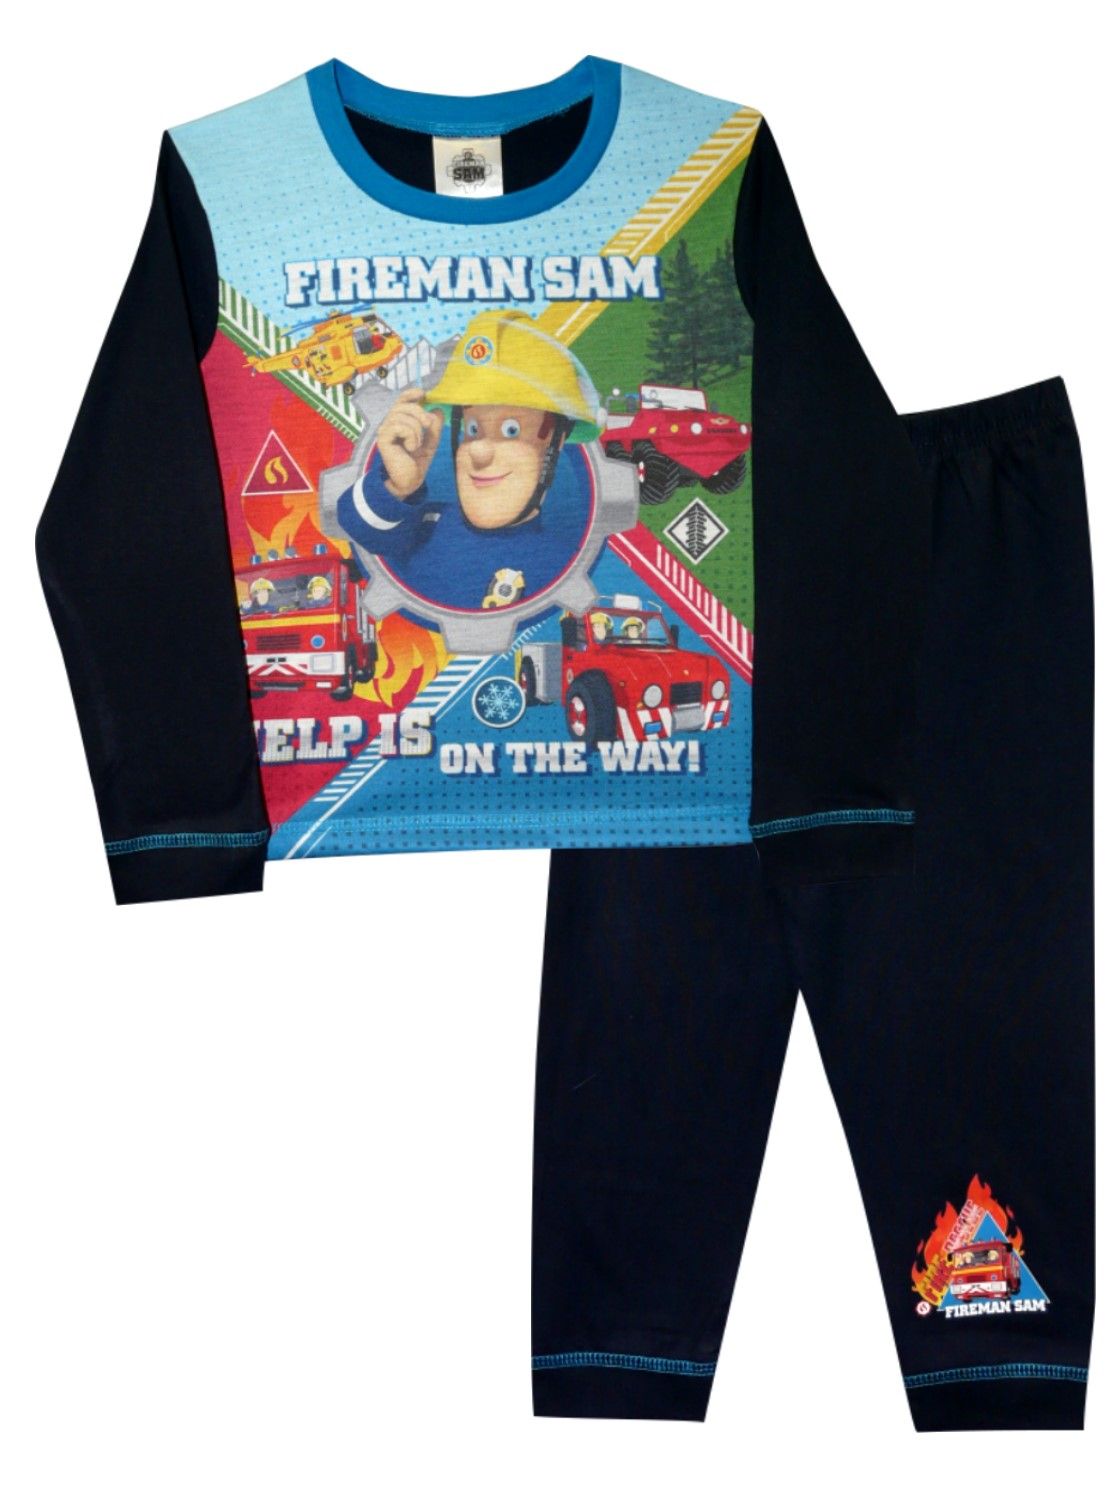 Fireman Sam "On the way" Boys Navy Blue Pyjamas